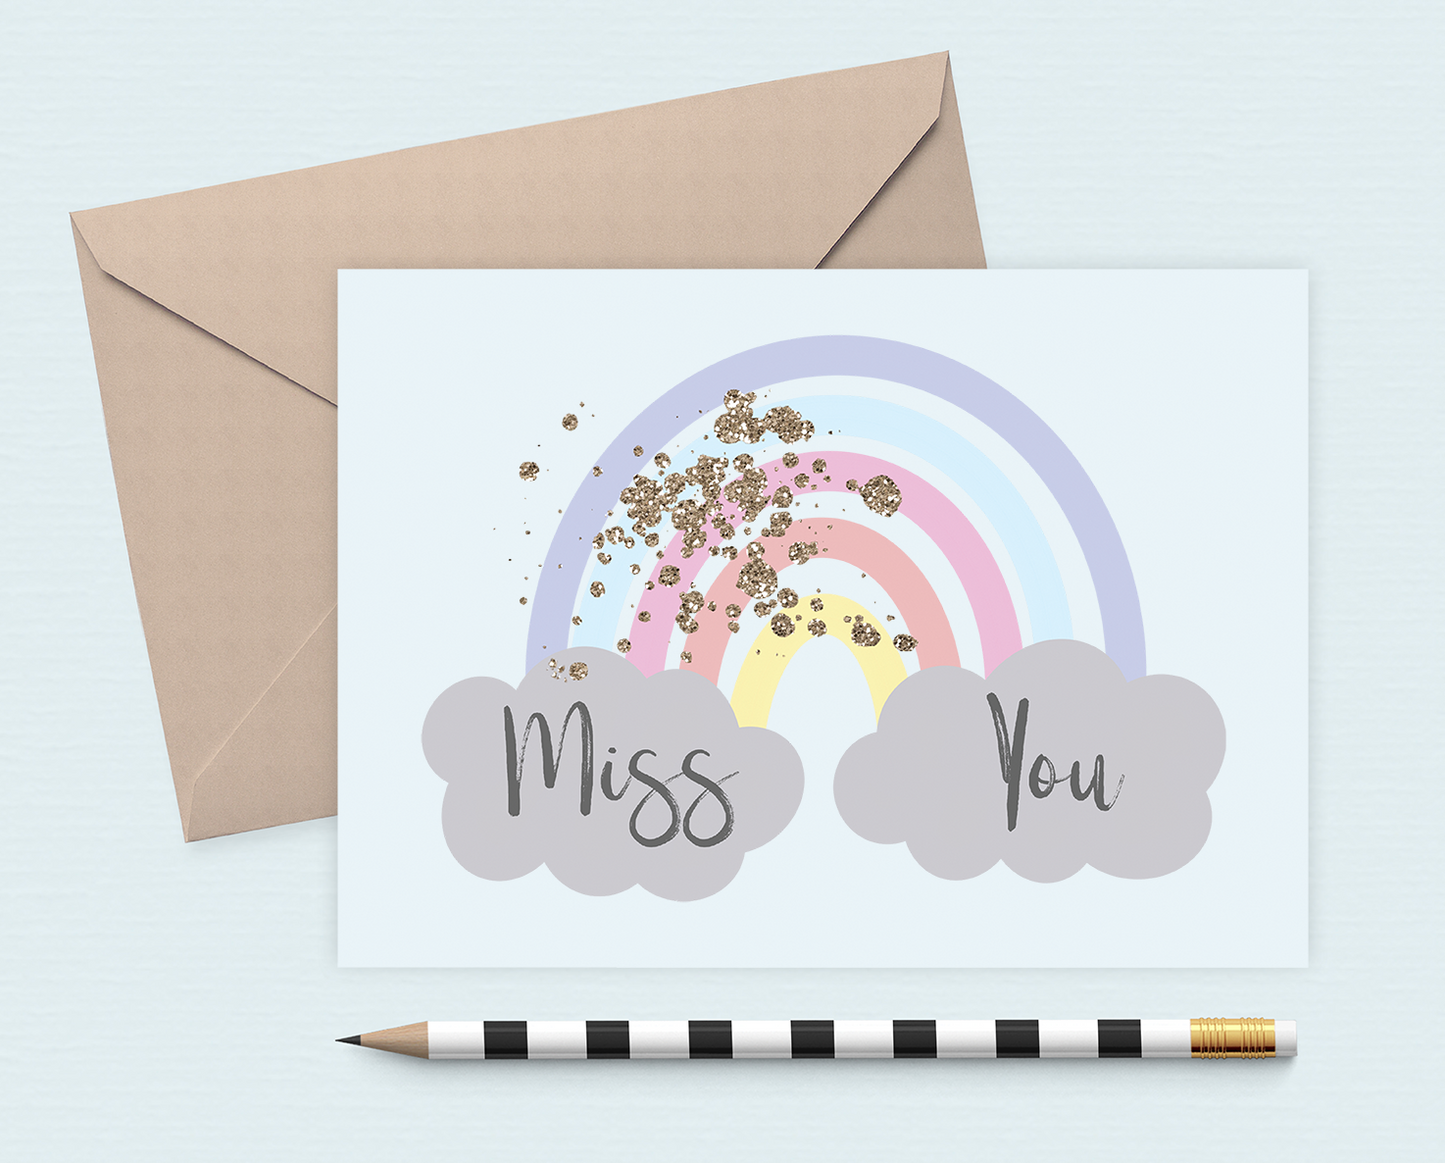 Rainbow Miss you Card Printable - Digital Download